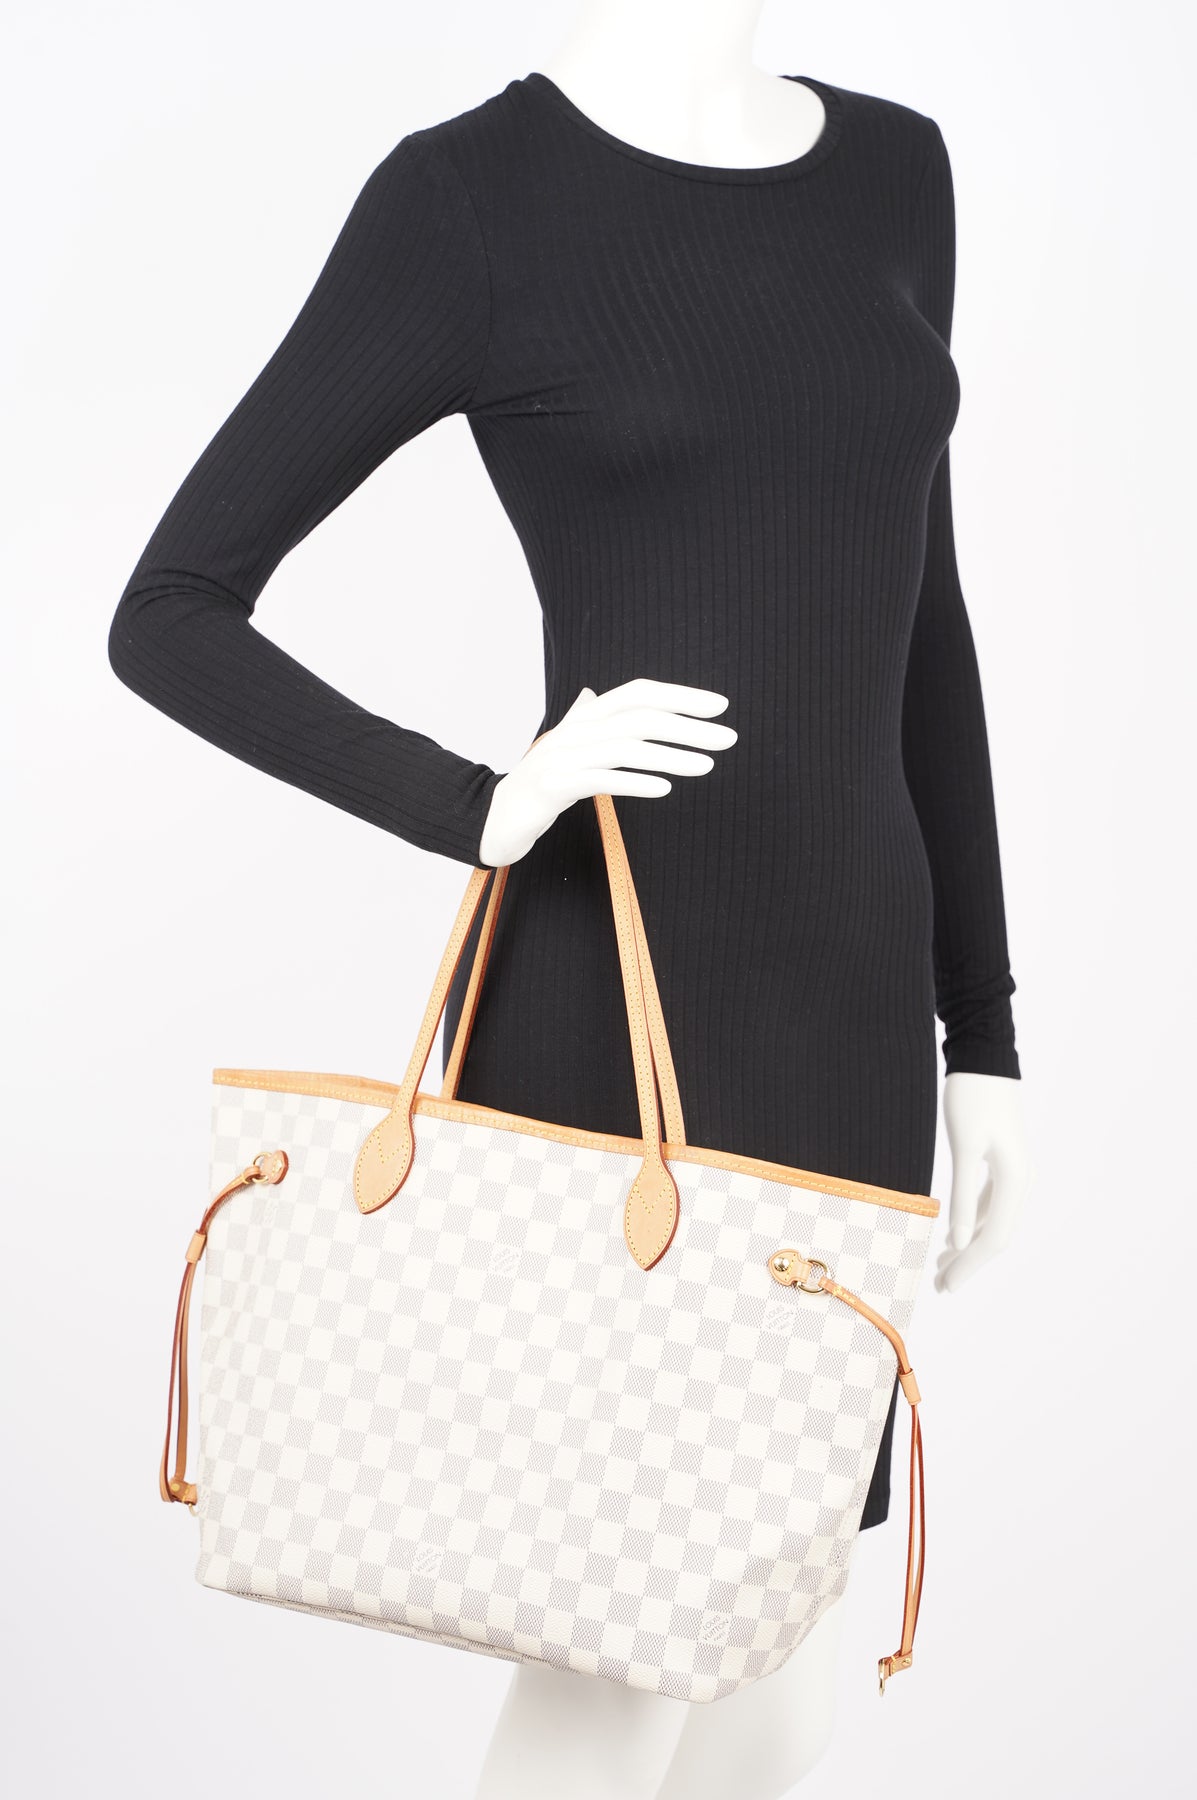 Louis Vuitton Neverfull mm Damier Azur Shoulder Bag White